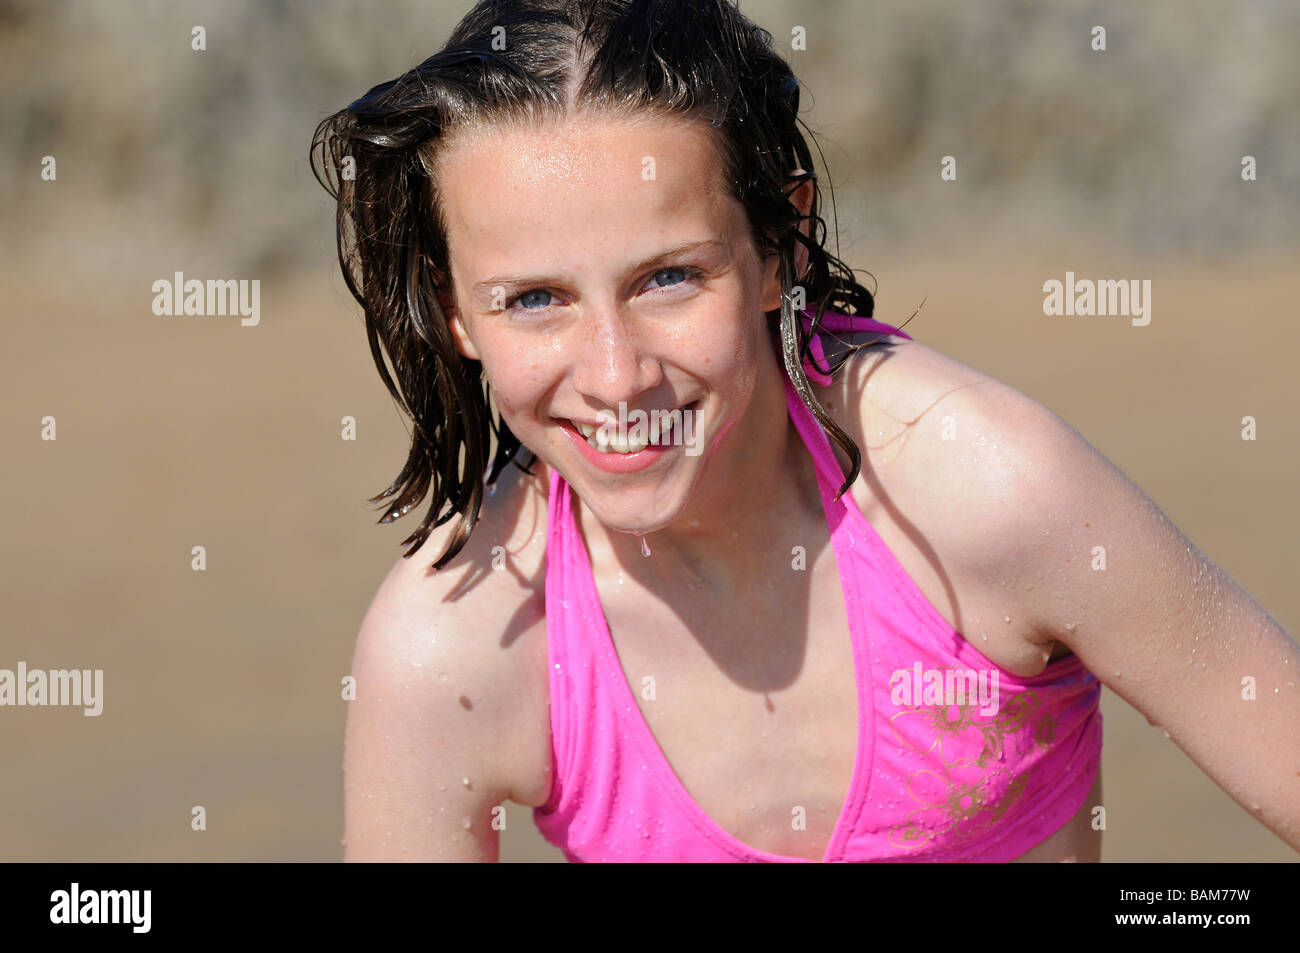 closeup portrait of girl wet after a swim Stock Photo